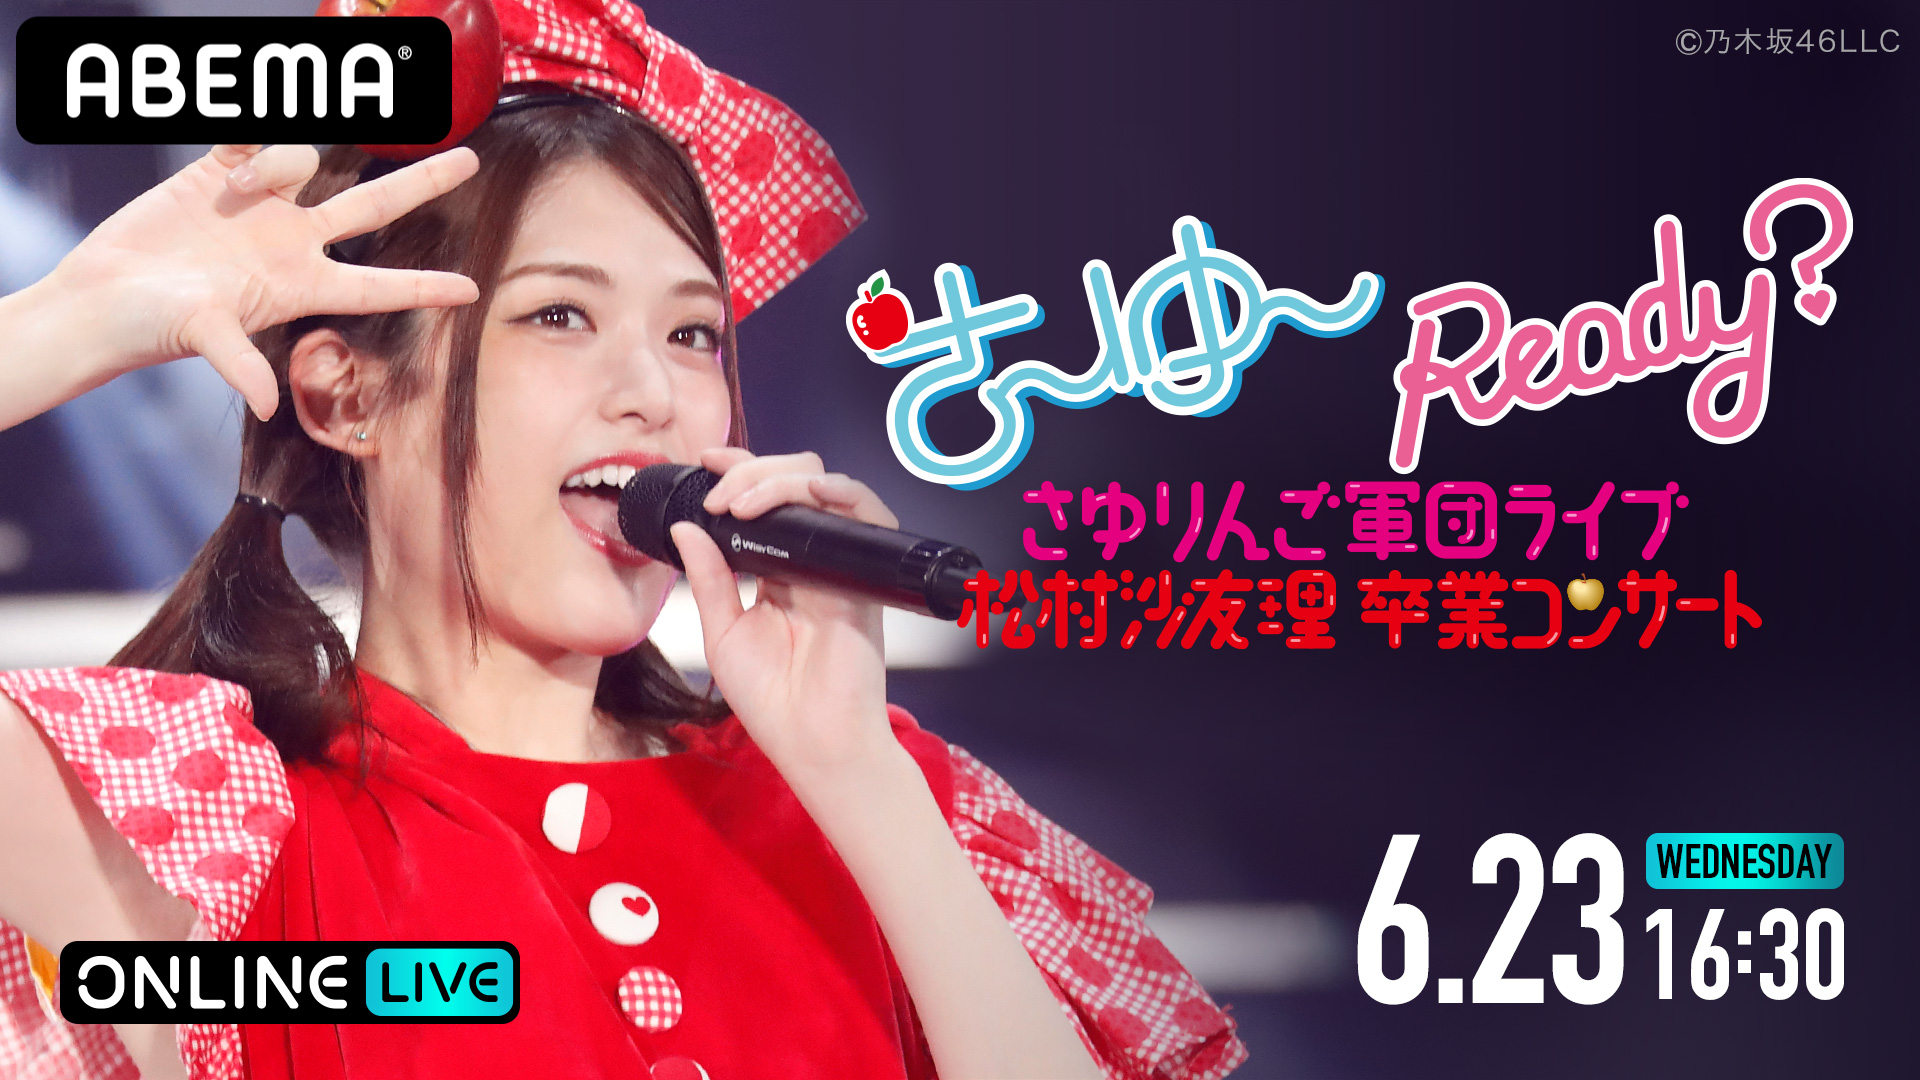 ABEMA PPV ONLINE LIVE」にて乃木坂46松村沙友理の卒業コンサート『さ